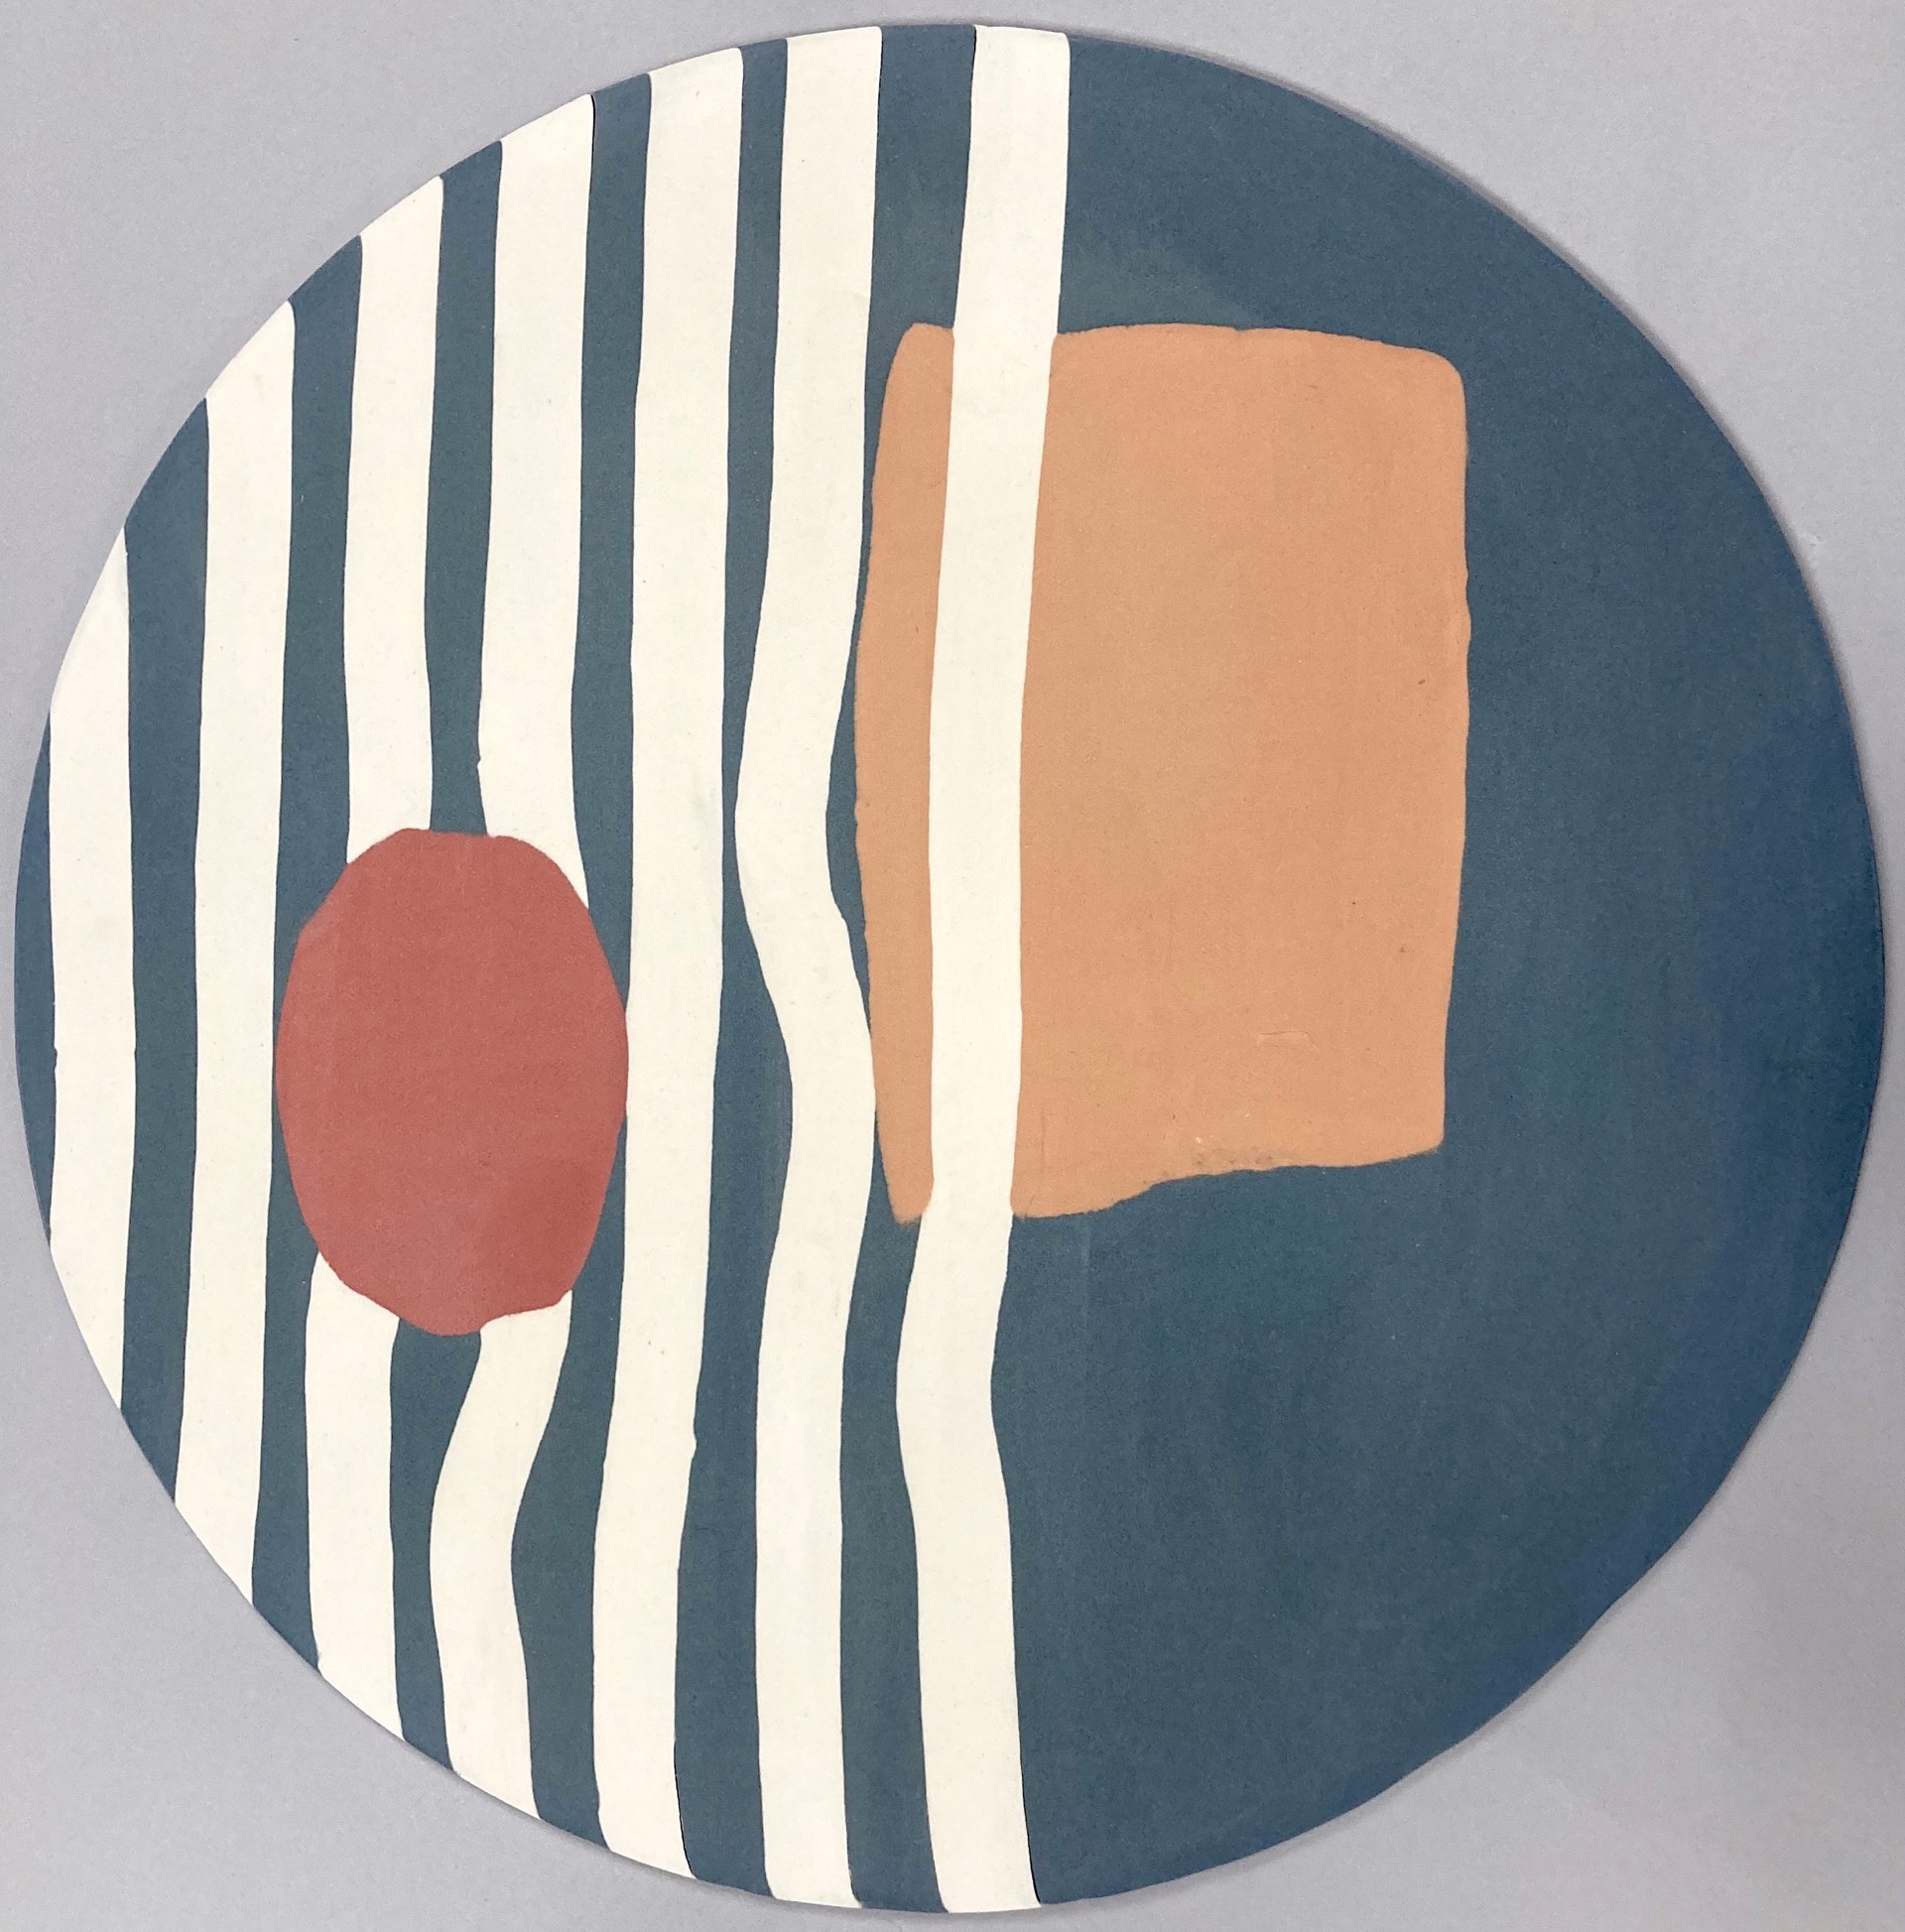 White/Orange on Blue-Gray Ground by Jennifer Prichard